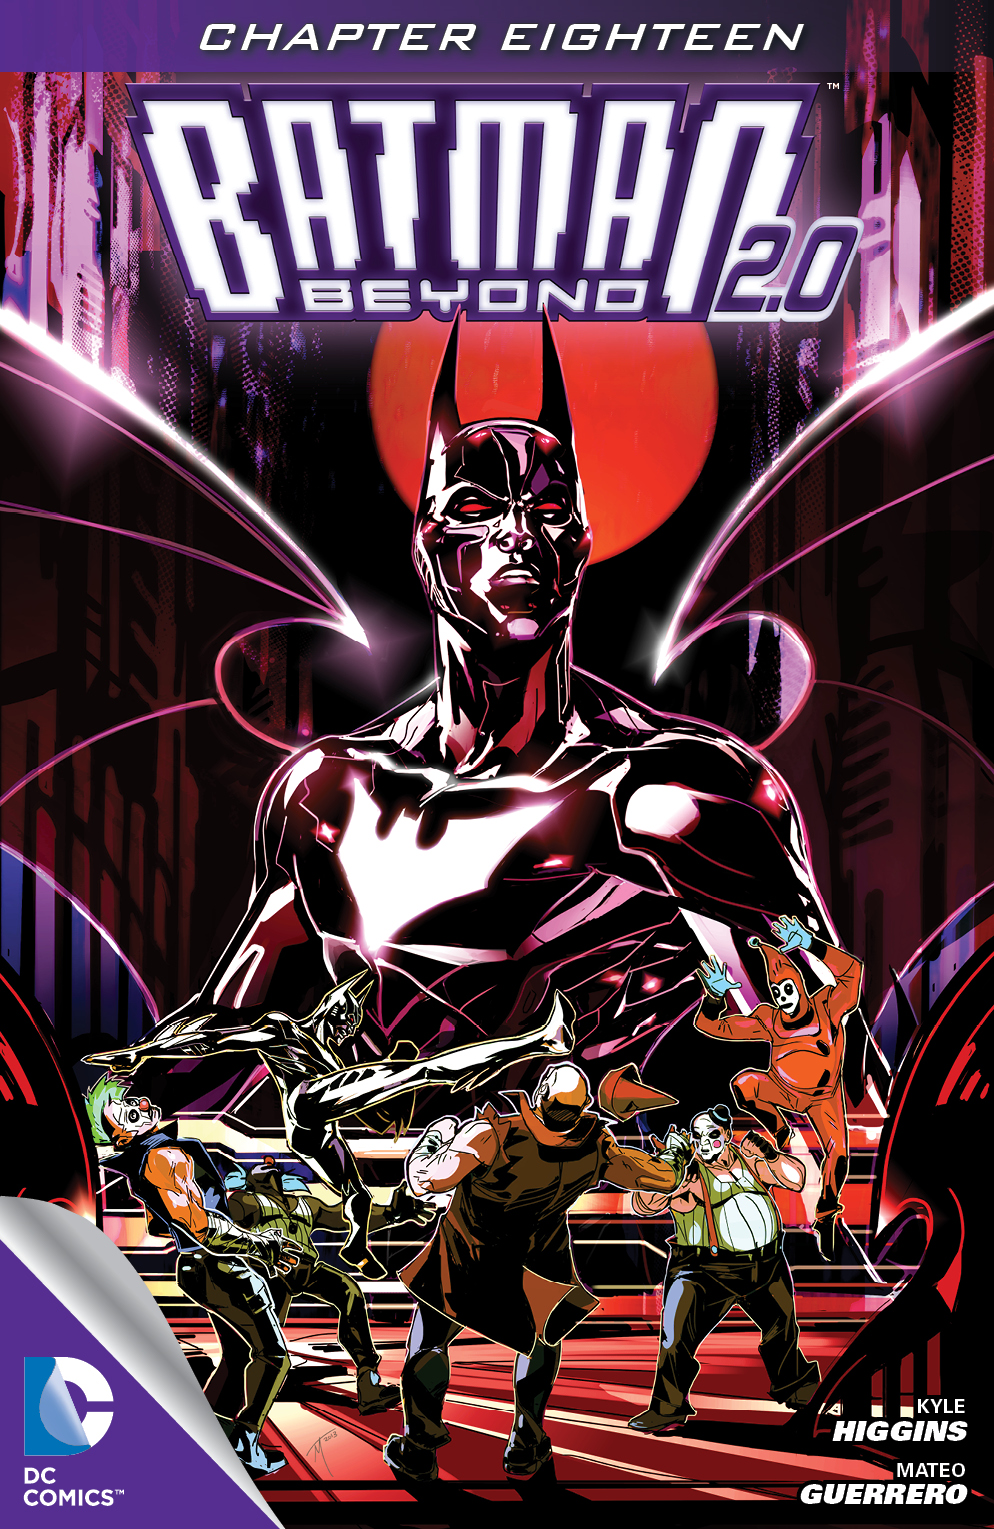 Batman Beyond 2.0 #18 preview images